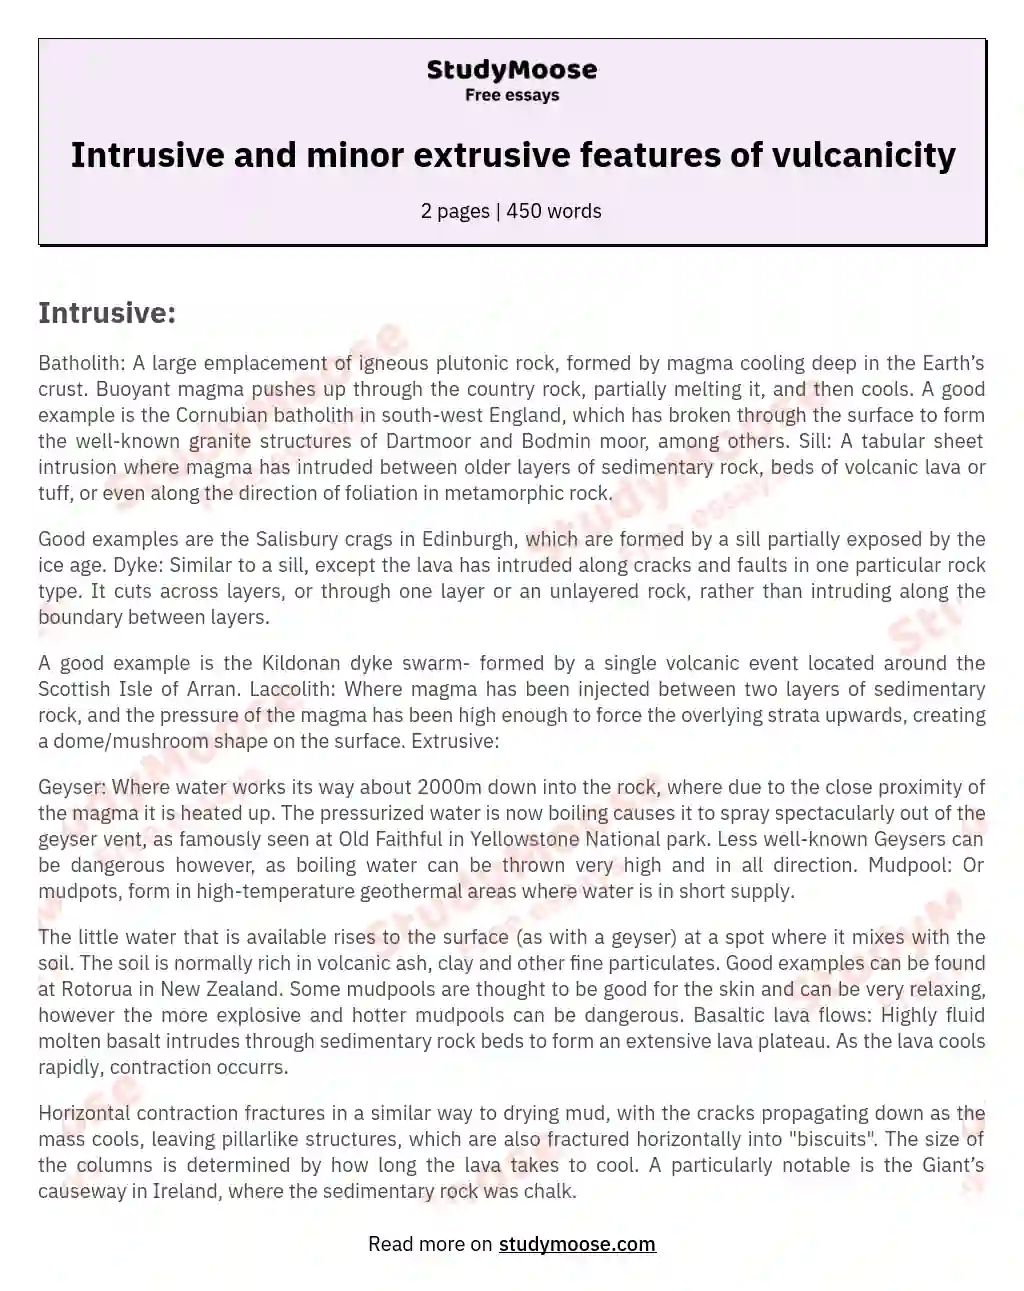 Intrusive and minor extrusive features of vulcanicity essay